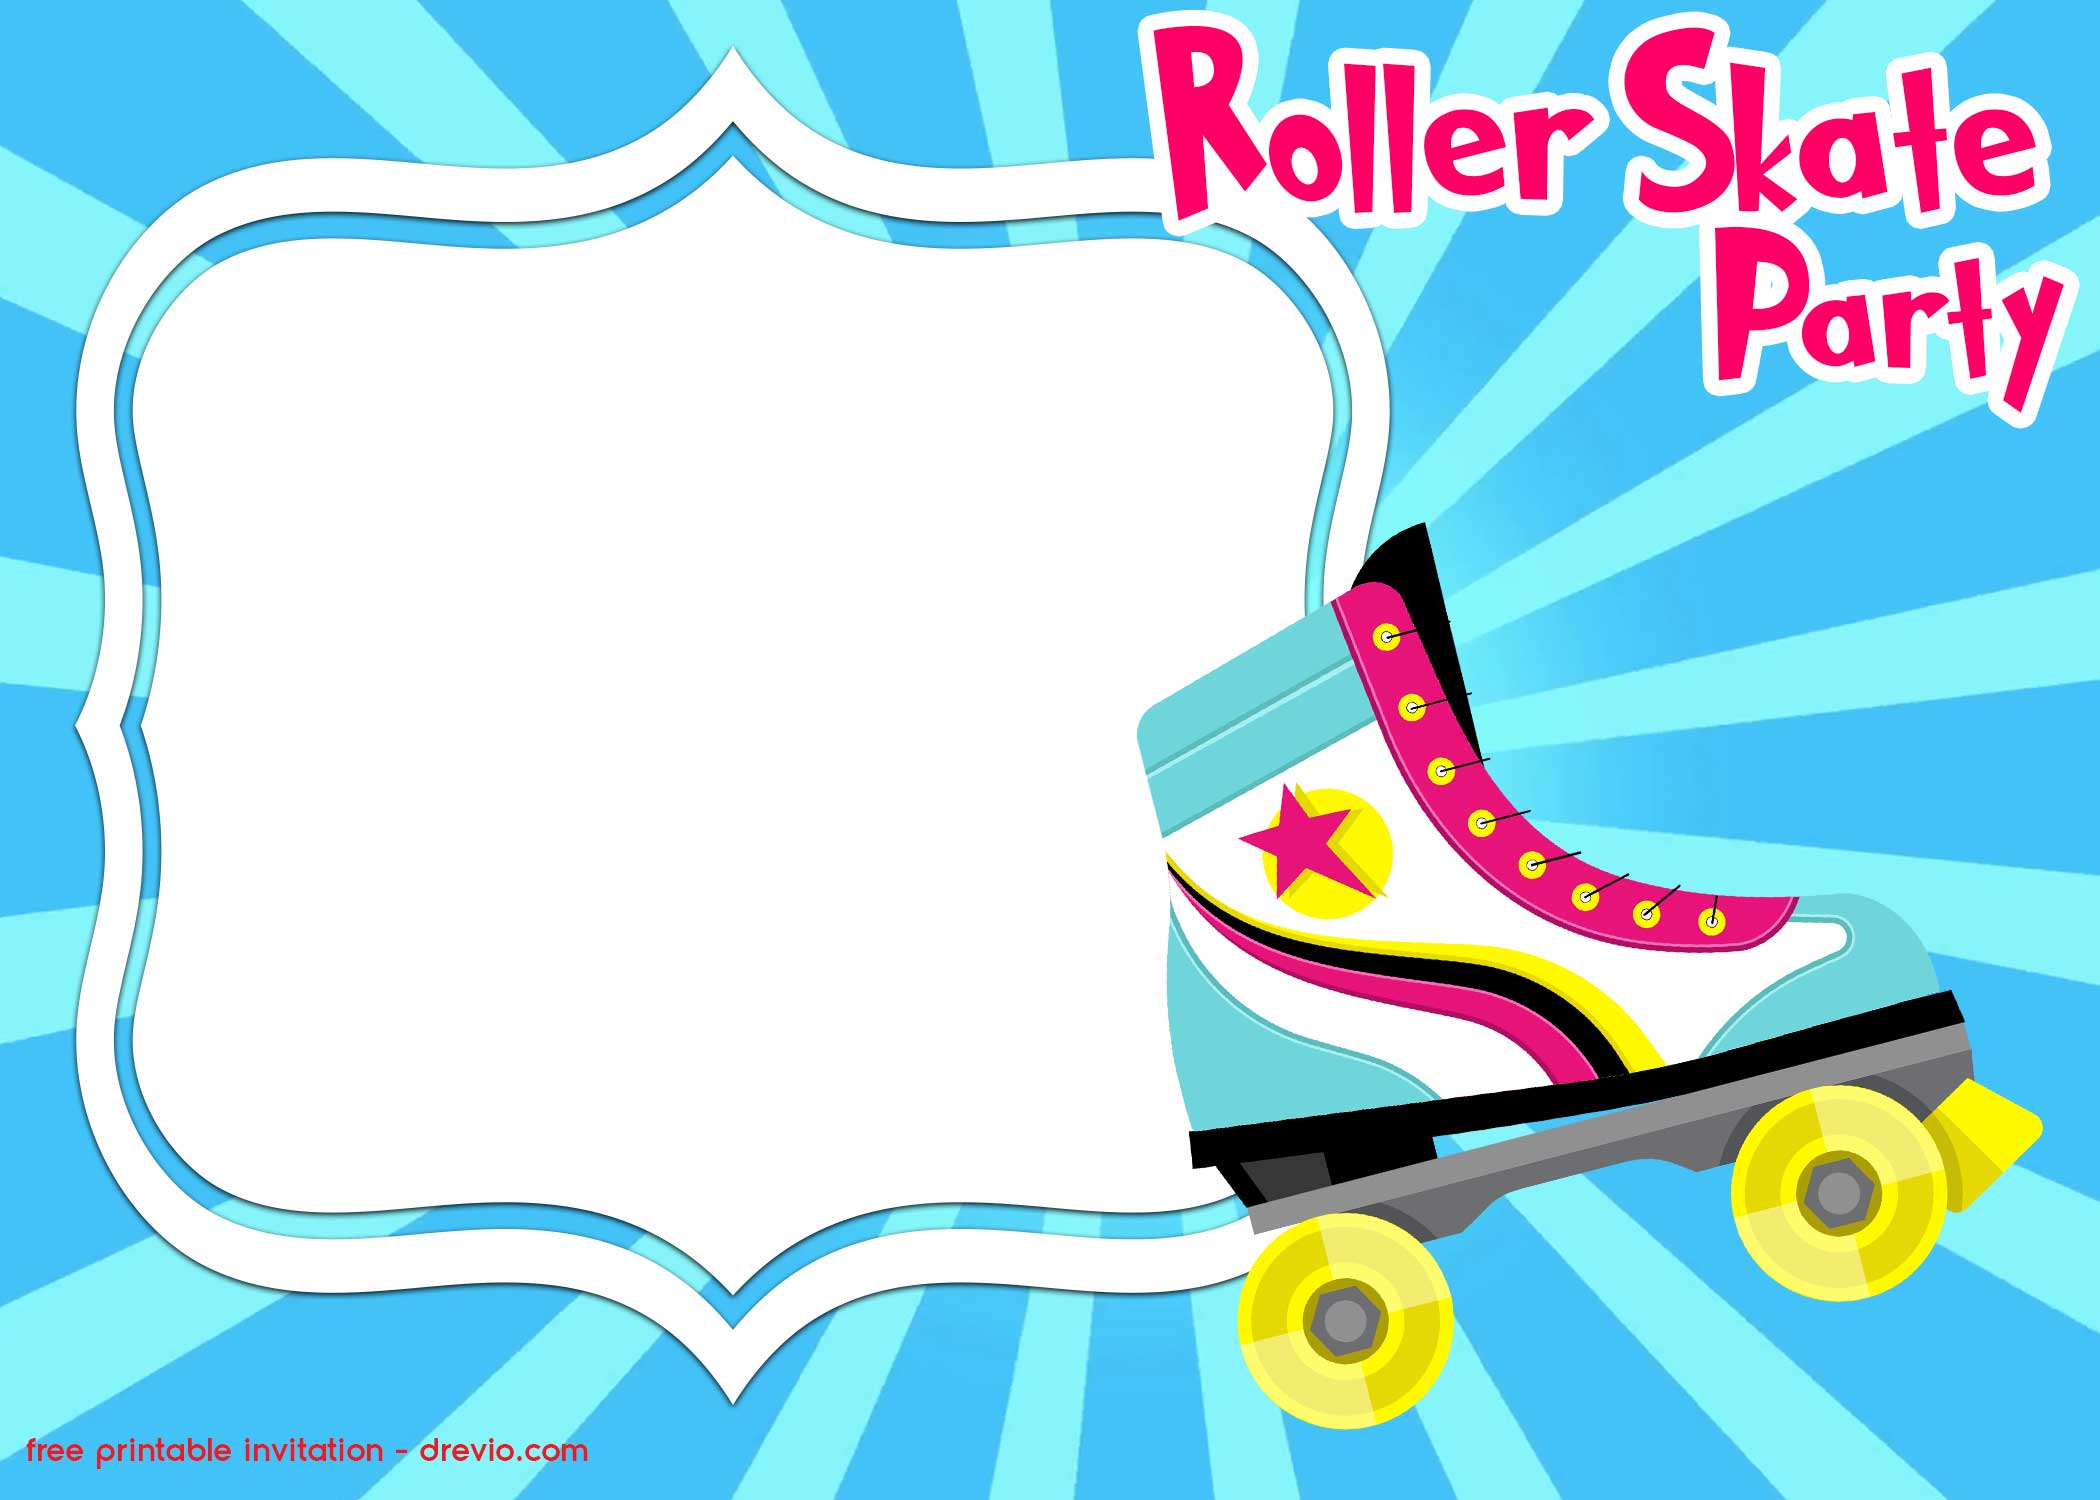 free-printable-roller-skating-invitation-templates-download-hundreds